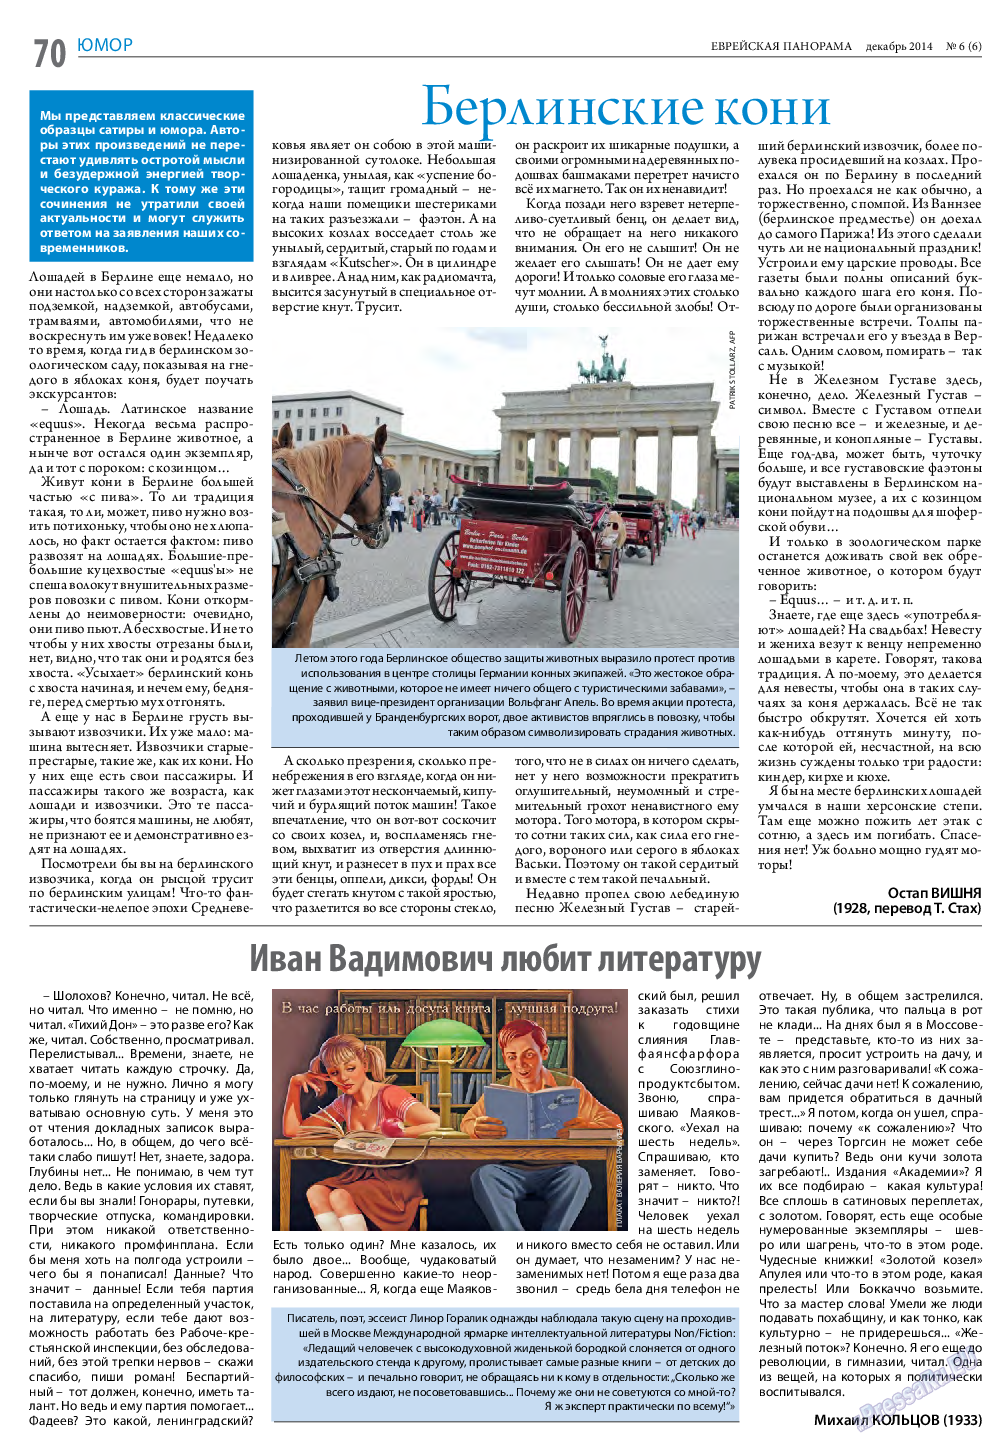 Еврейская панорама, газета. 2014 №6 стр.70